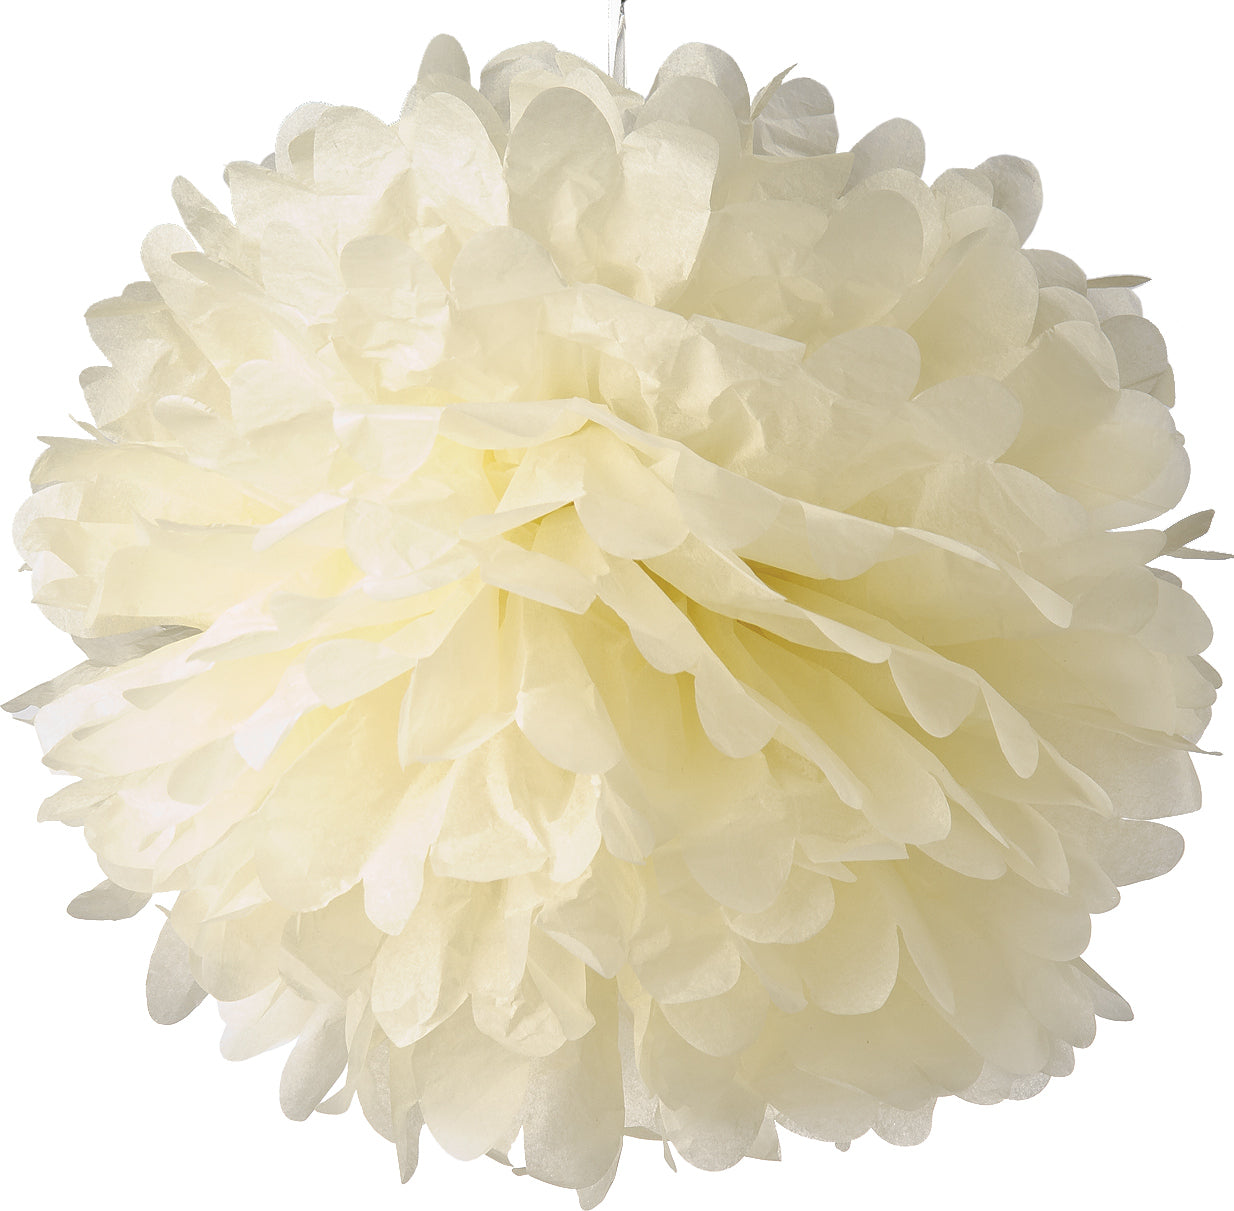 EZ-Fluff 12" Beige Tissue Paper Pom Poms Flowers Balls, Decorations (4 PACK) - PaperLanternStore.com - Paper Lanterns, Decor, Party Lights & More